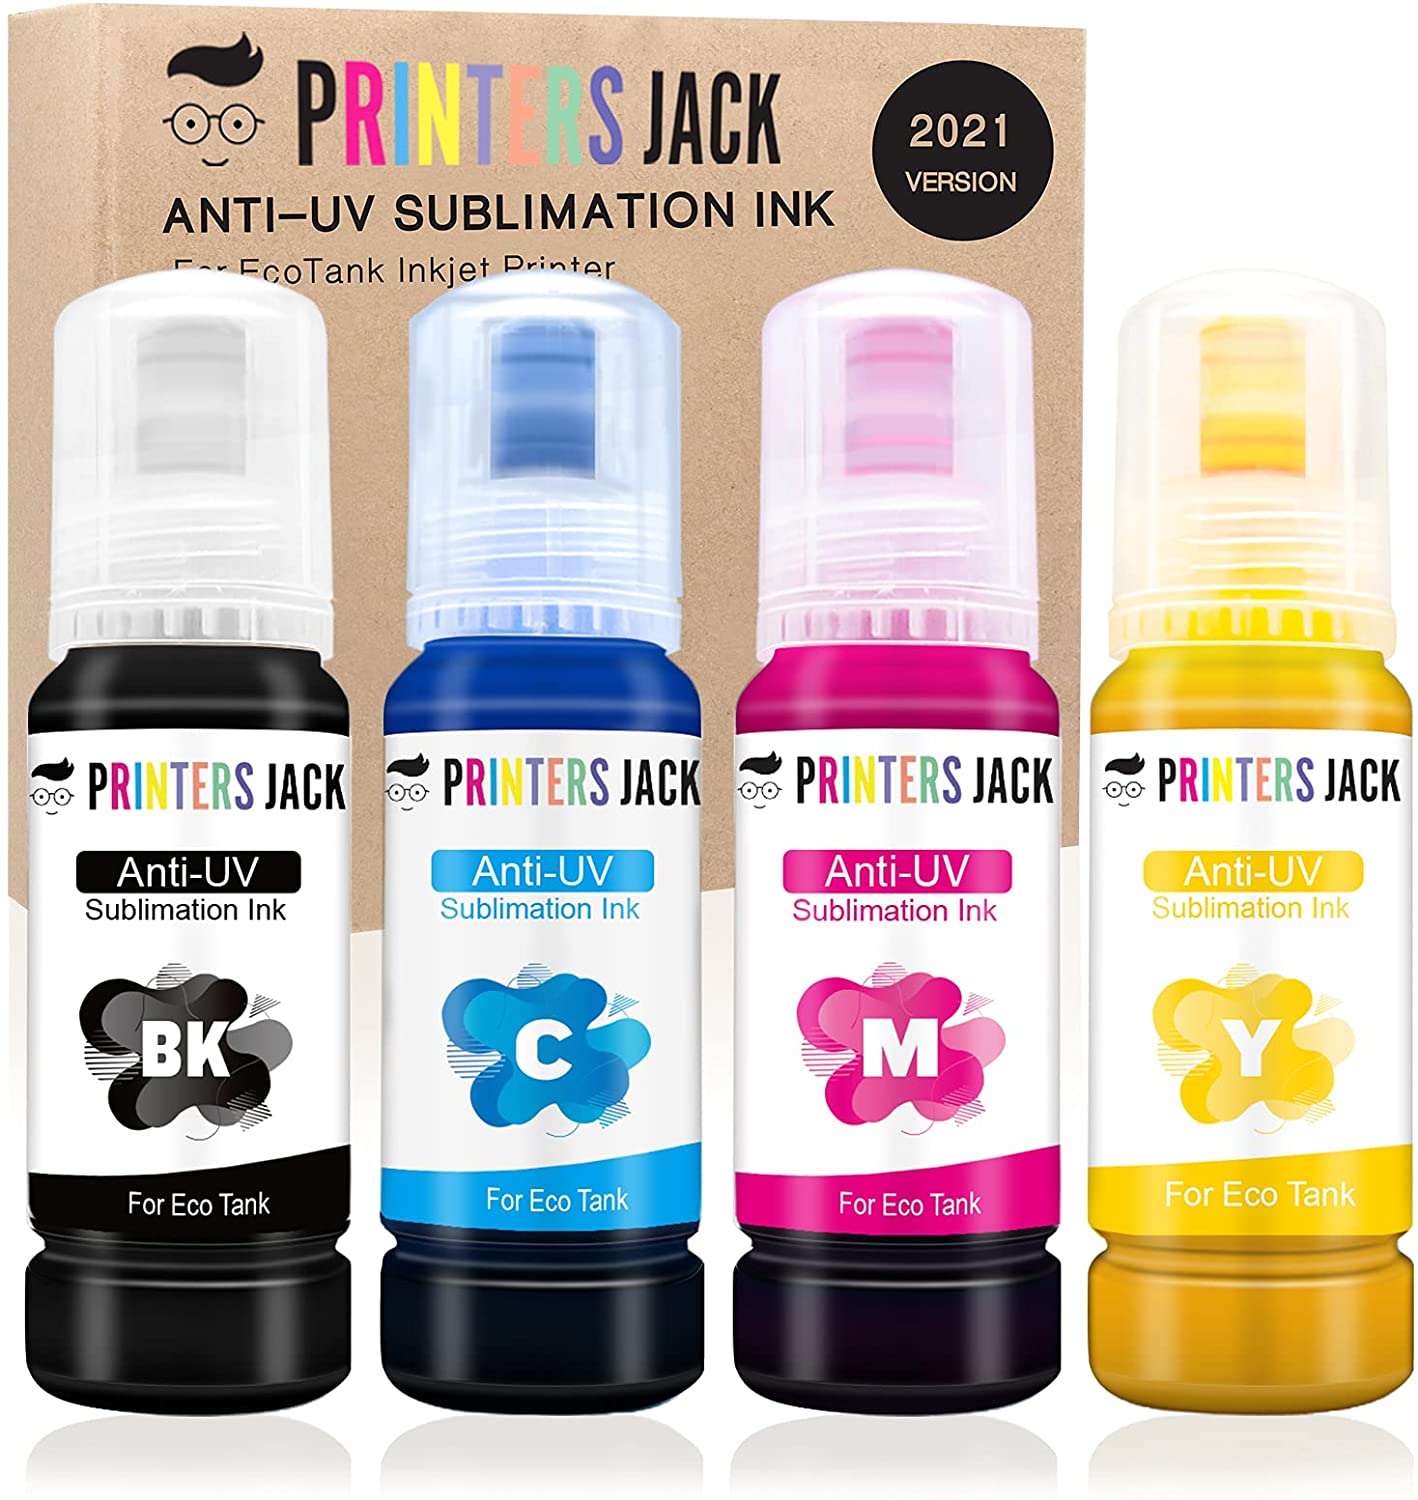 Printers Jack Light Color Sublimation Paper All Inkjet Printers A4